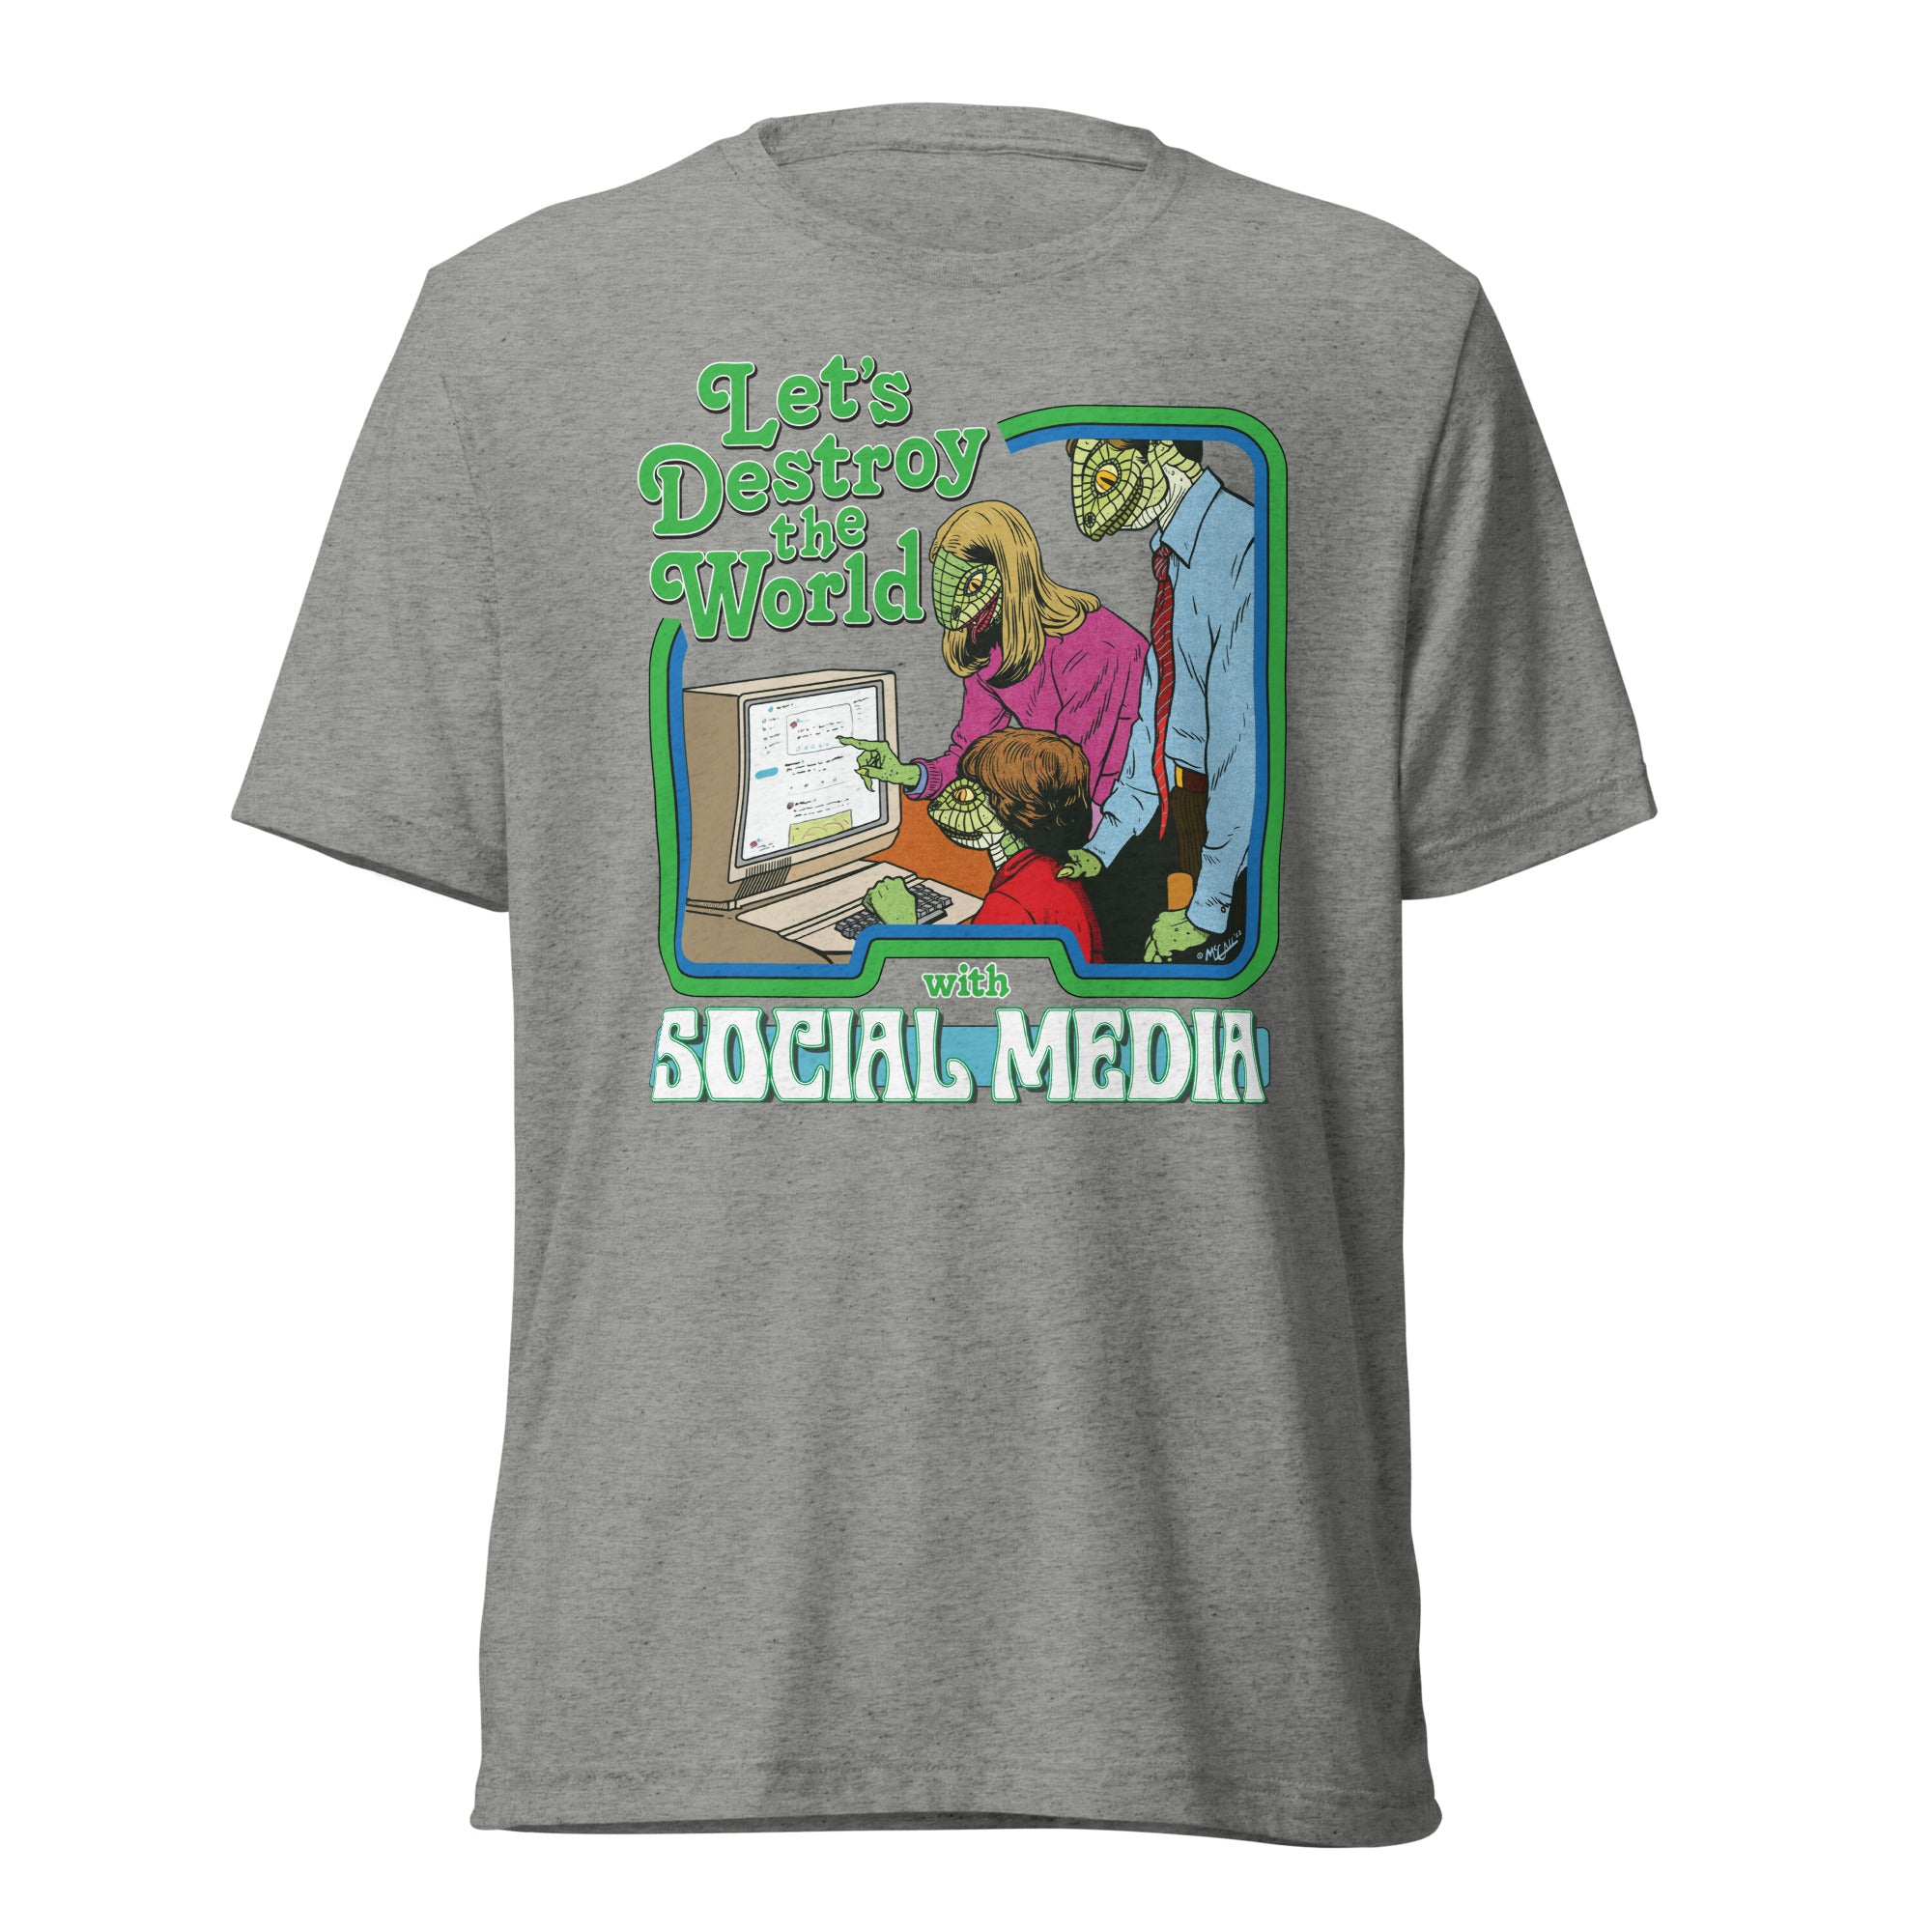 Let's Destroy the World With Social Media Tri-blend T-Shirt